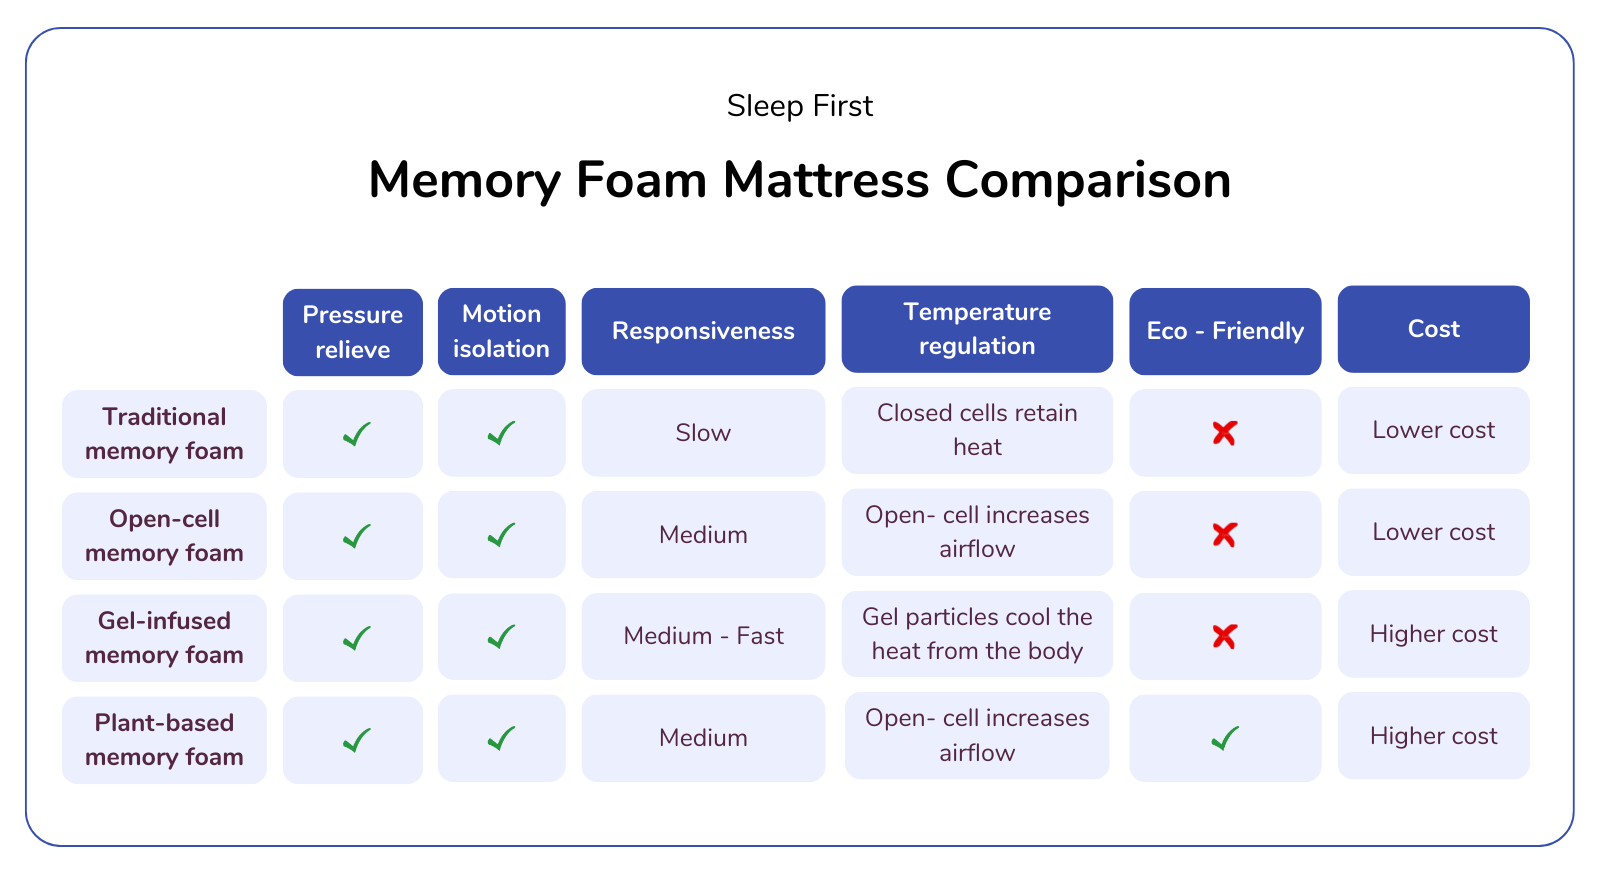 Memory foam mattress comparison chart.